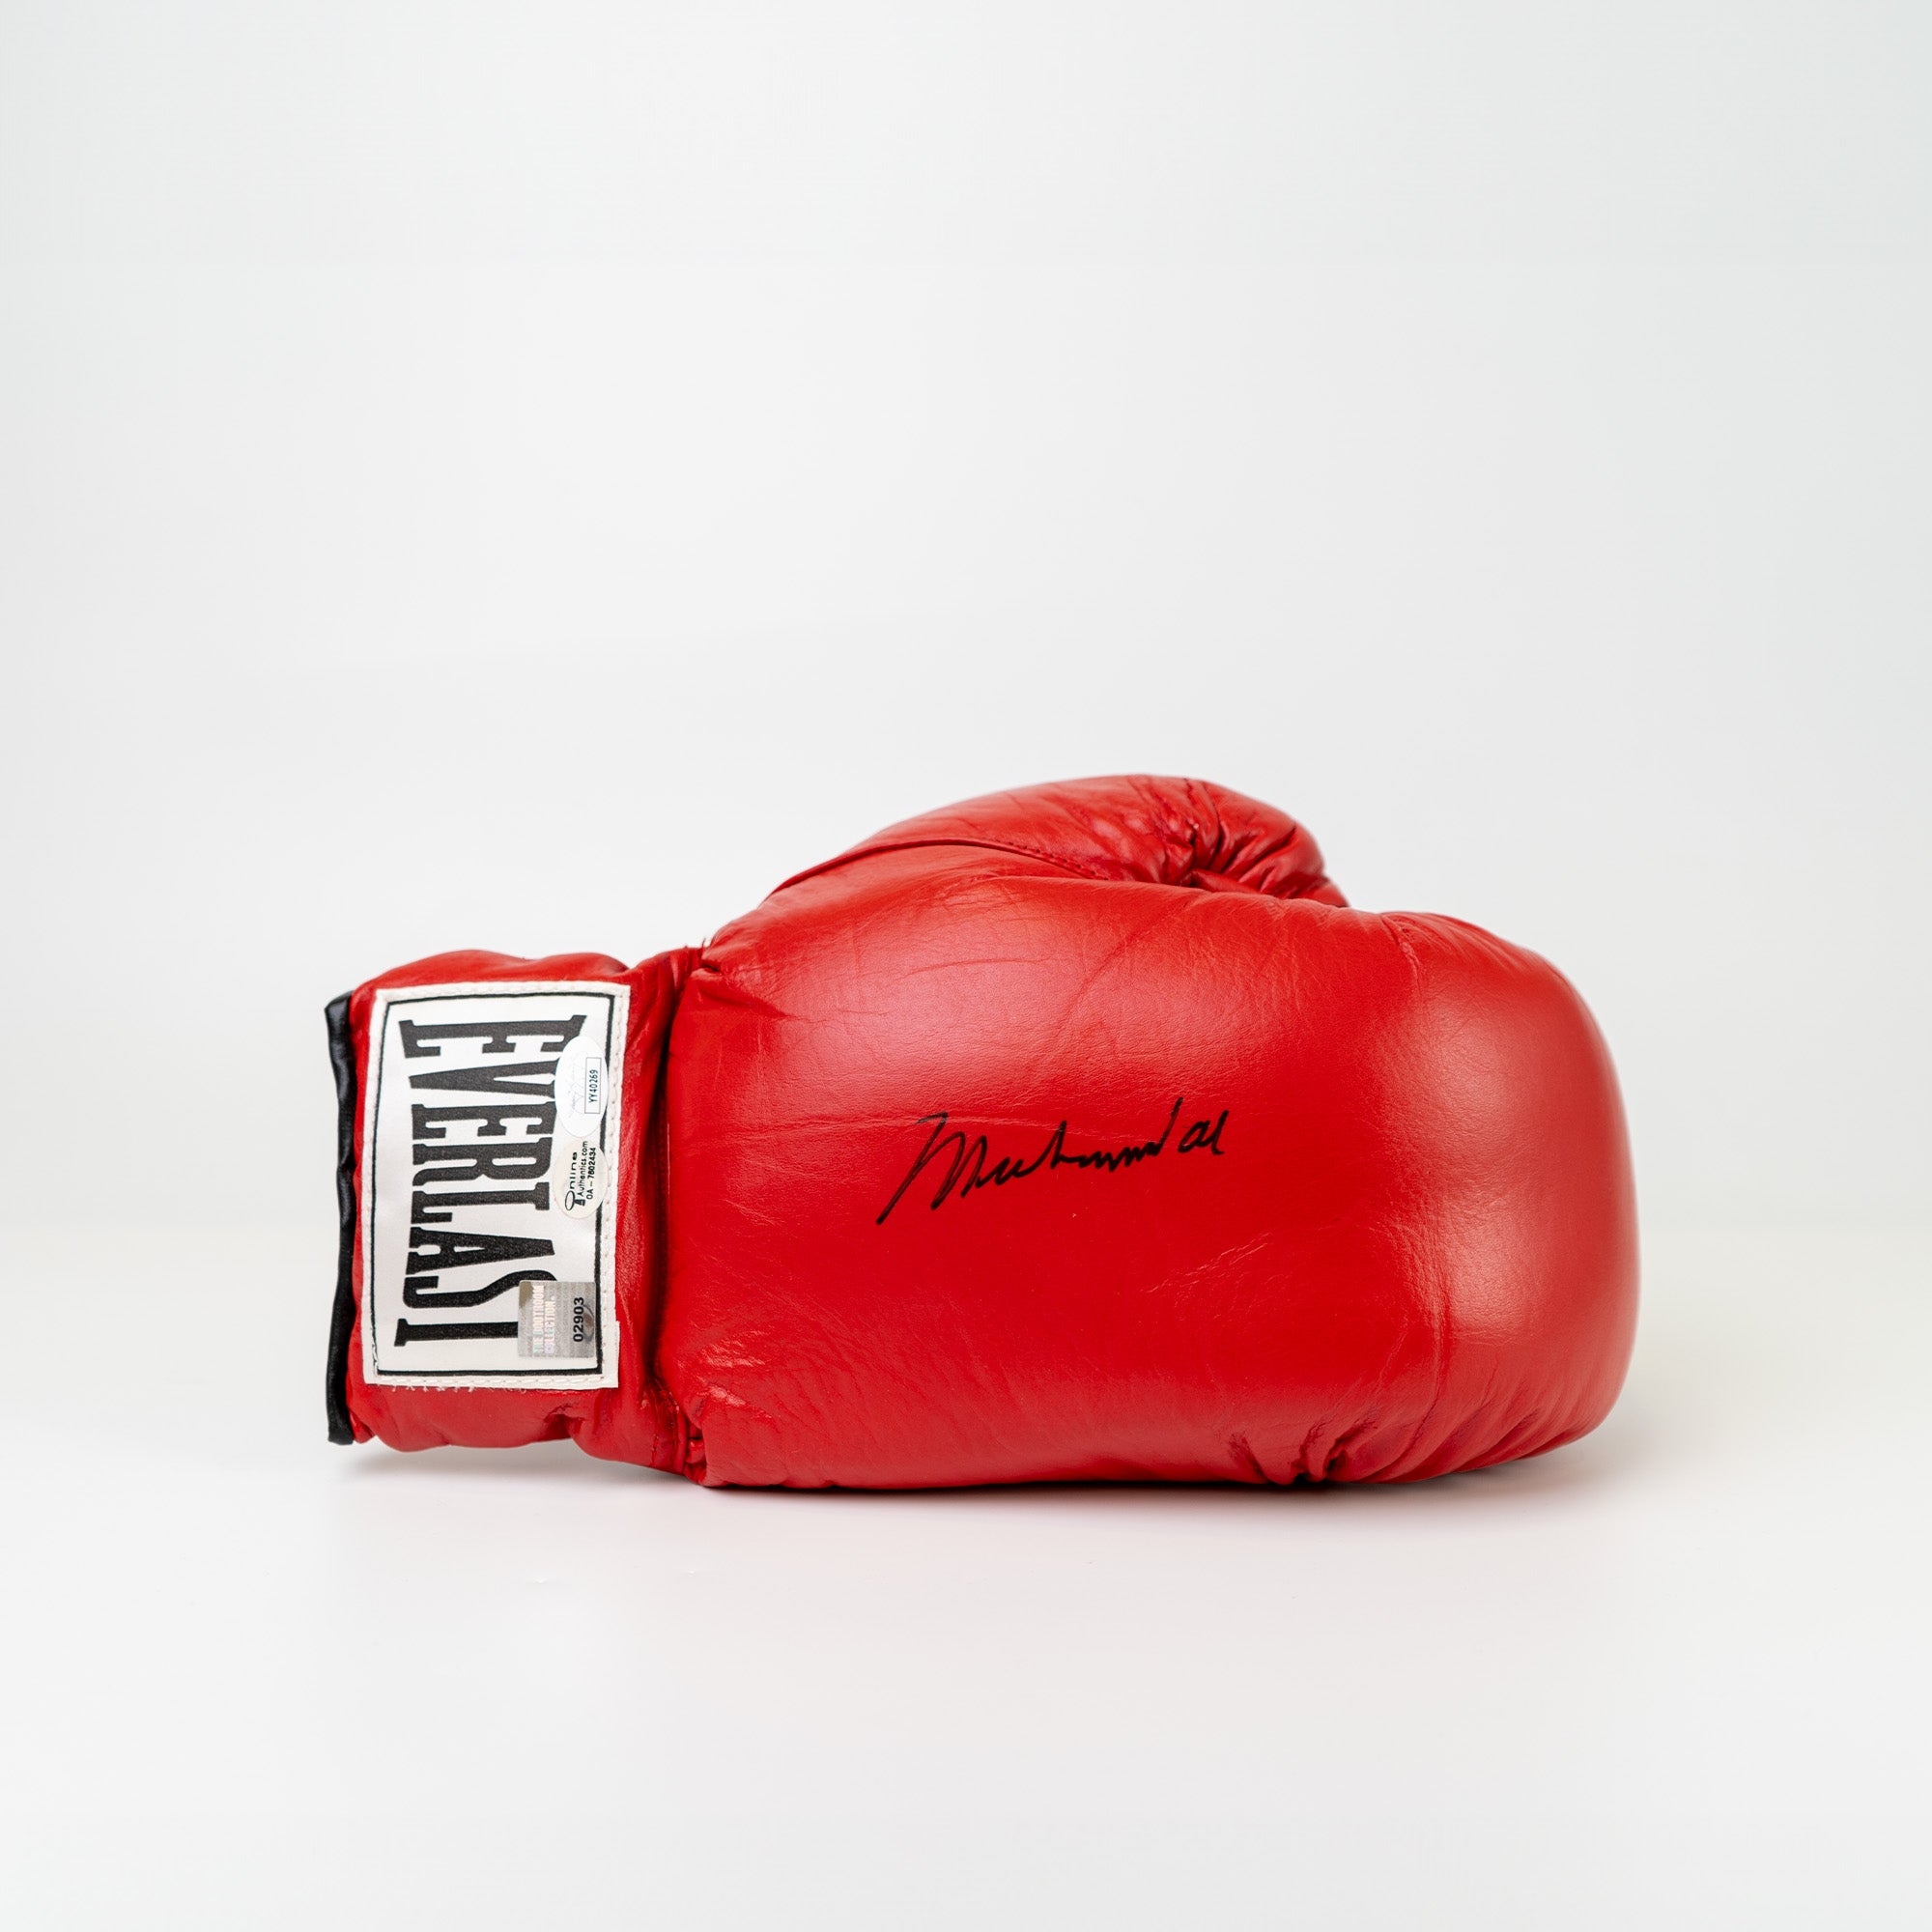 Muhammad Ali Signed Red Everlast Boxing Glove